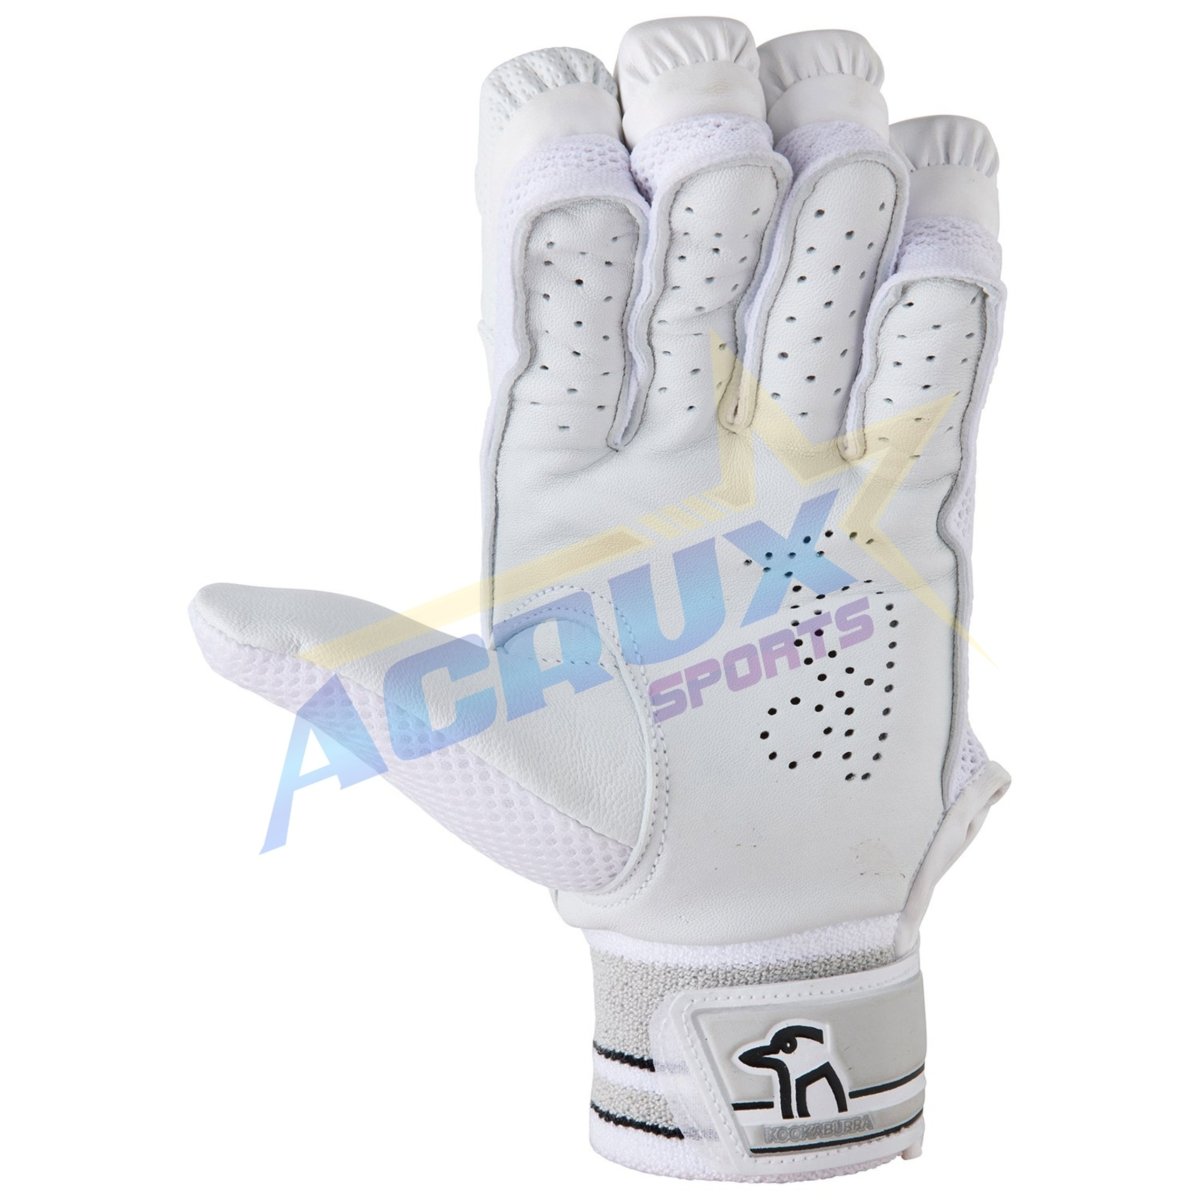 Kookaburra Ghost Pro 4.0 Cricket Batting Gloves